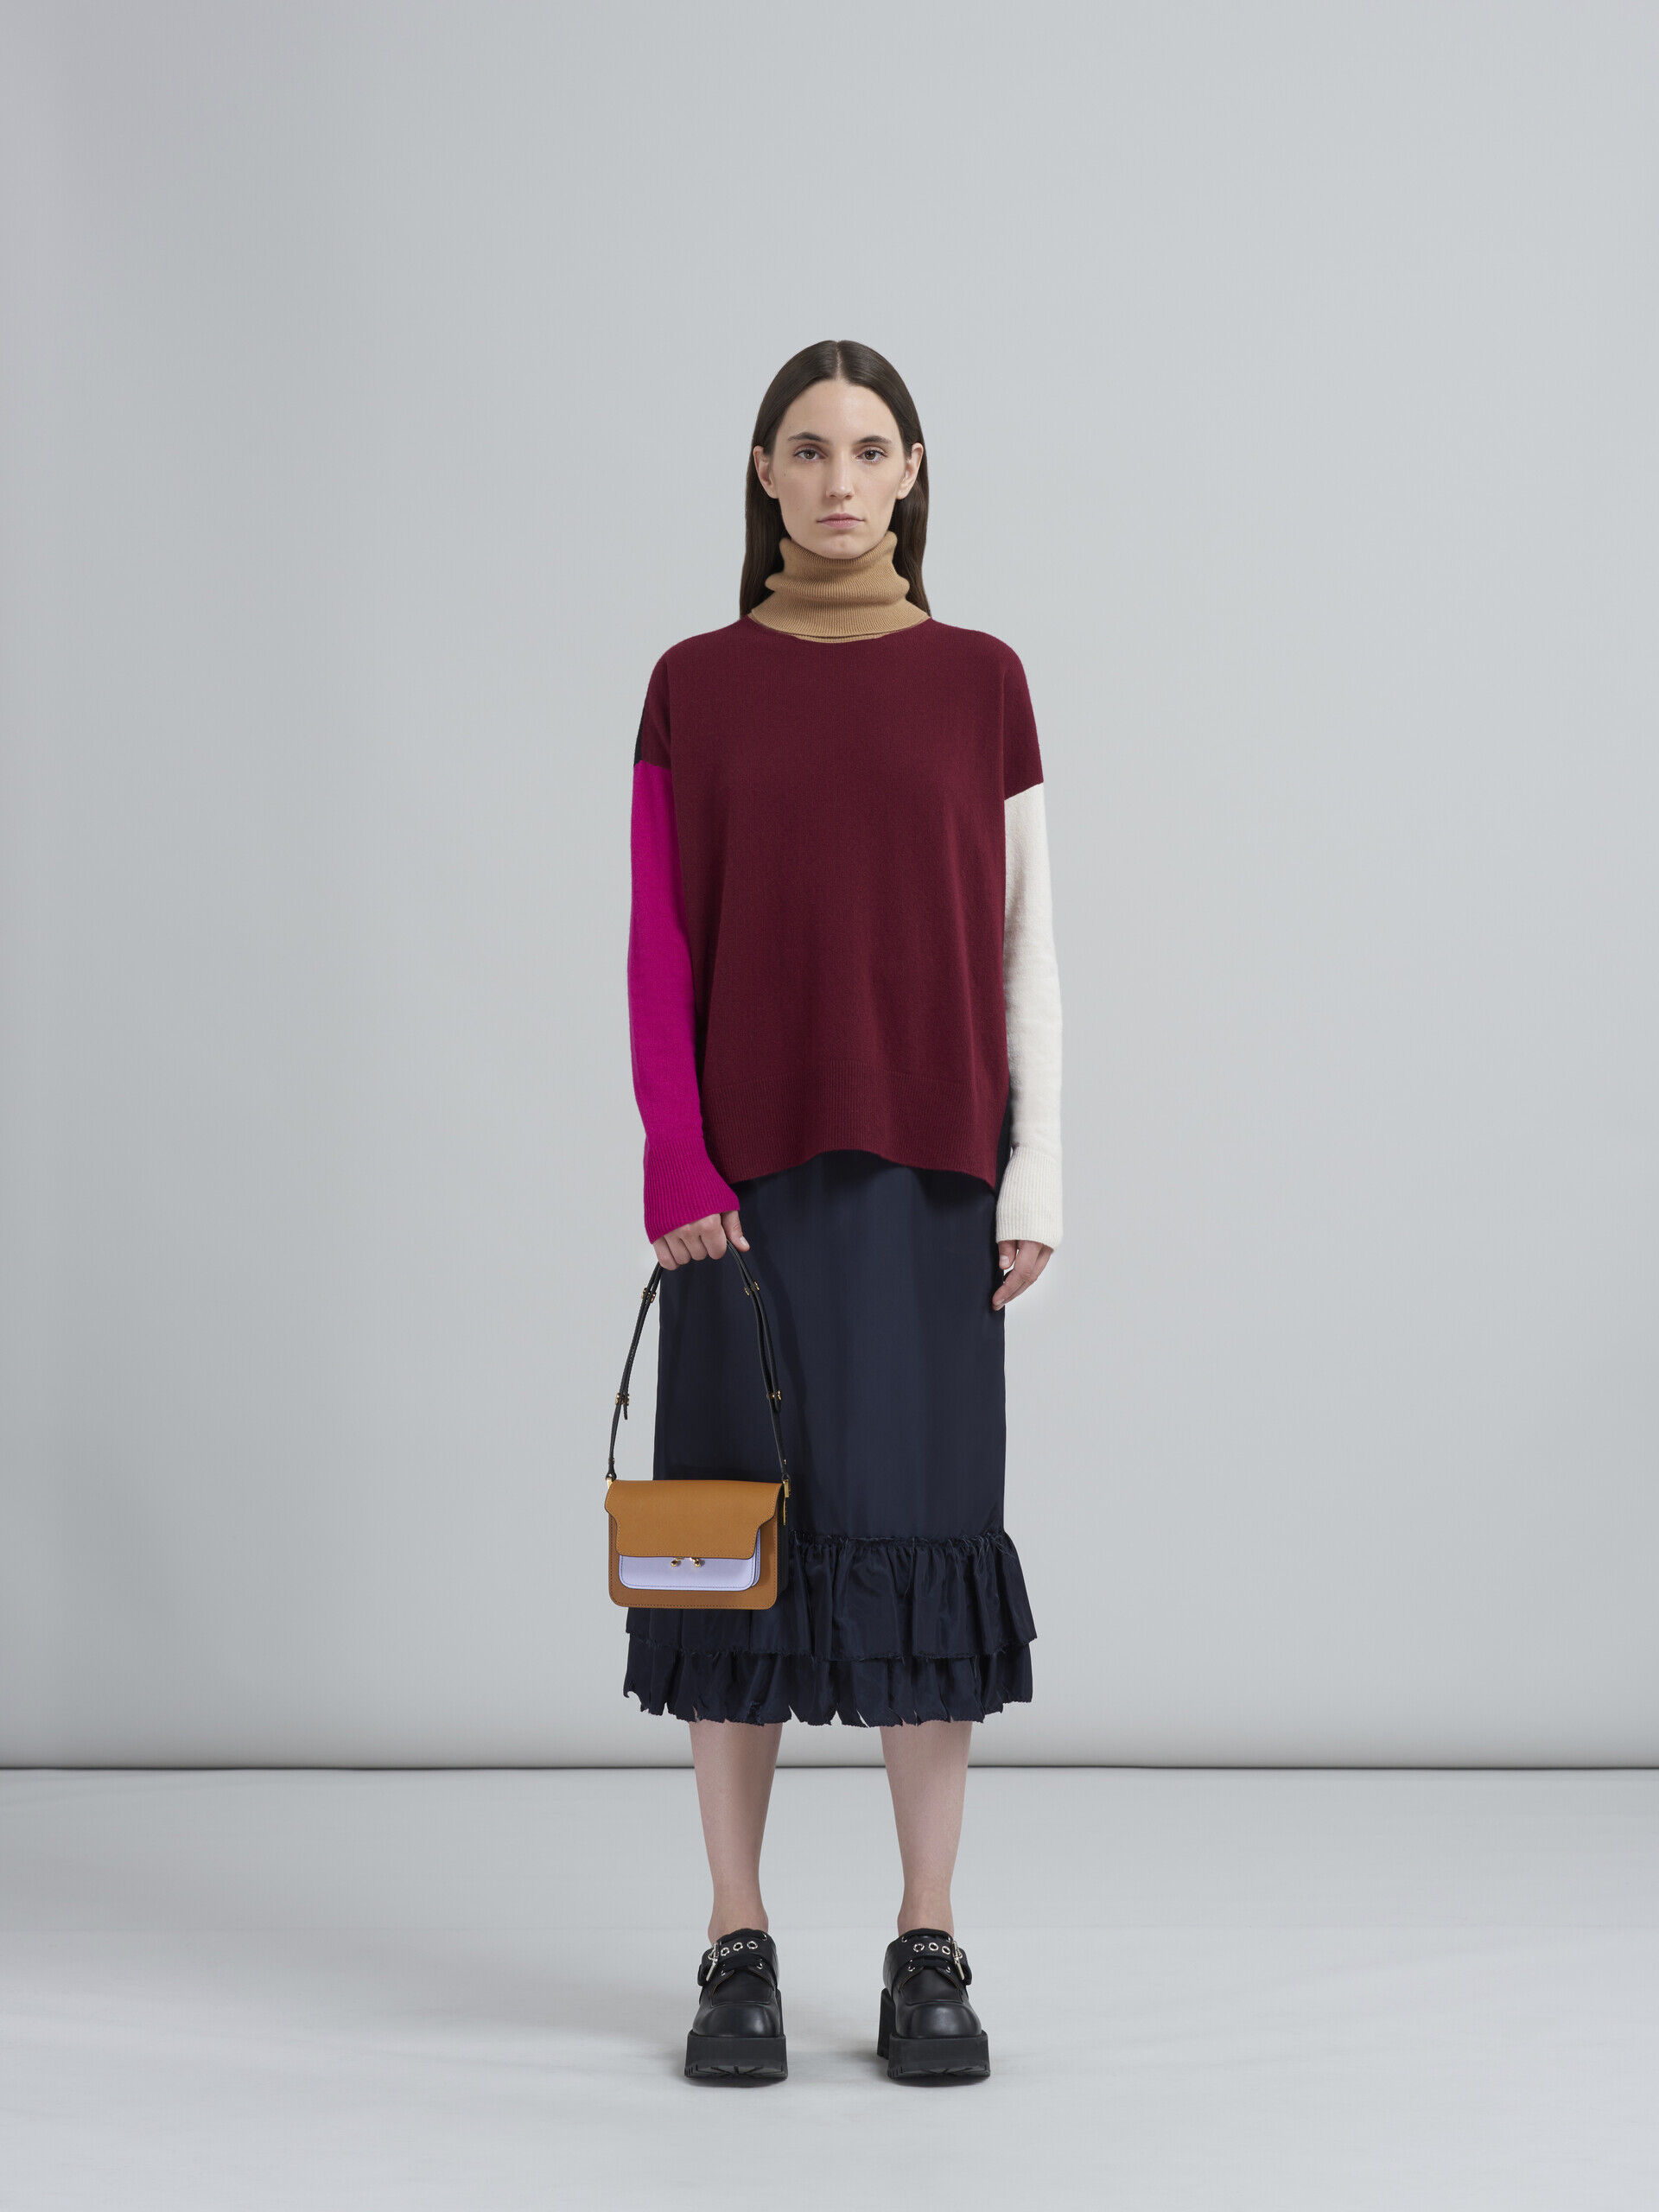 TRUNK mini bag in brown lilac and black saffiano leather | Marni